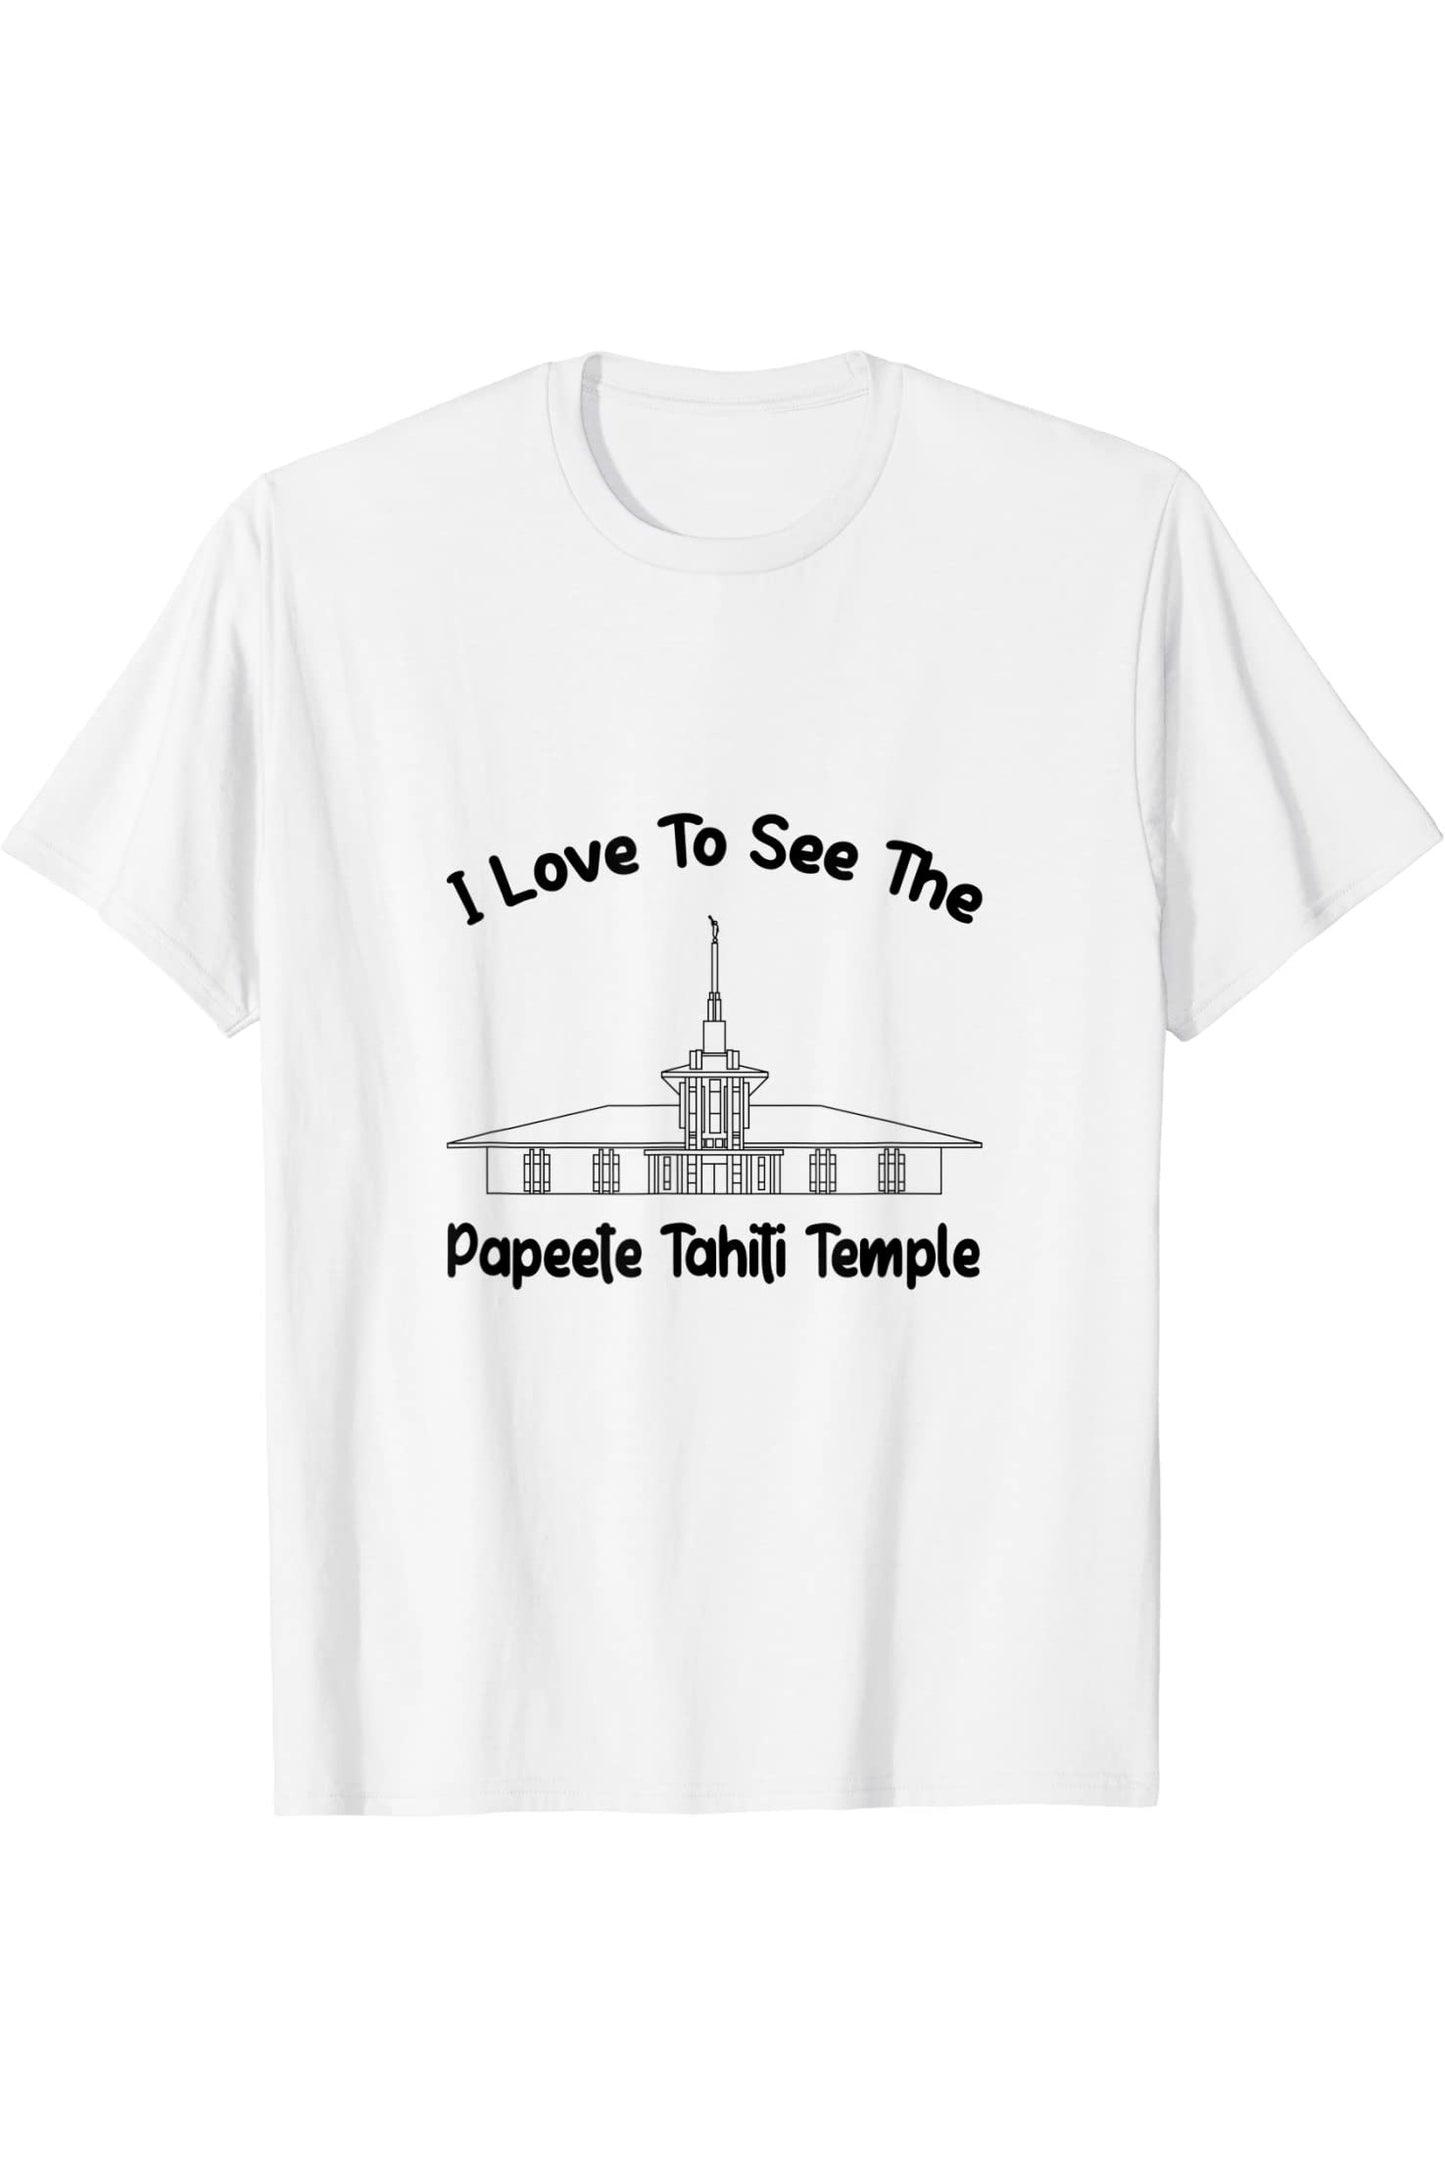 Papeete Tahiti Temple T-Shirt - Primary Style (English) US